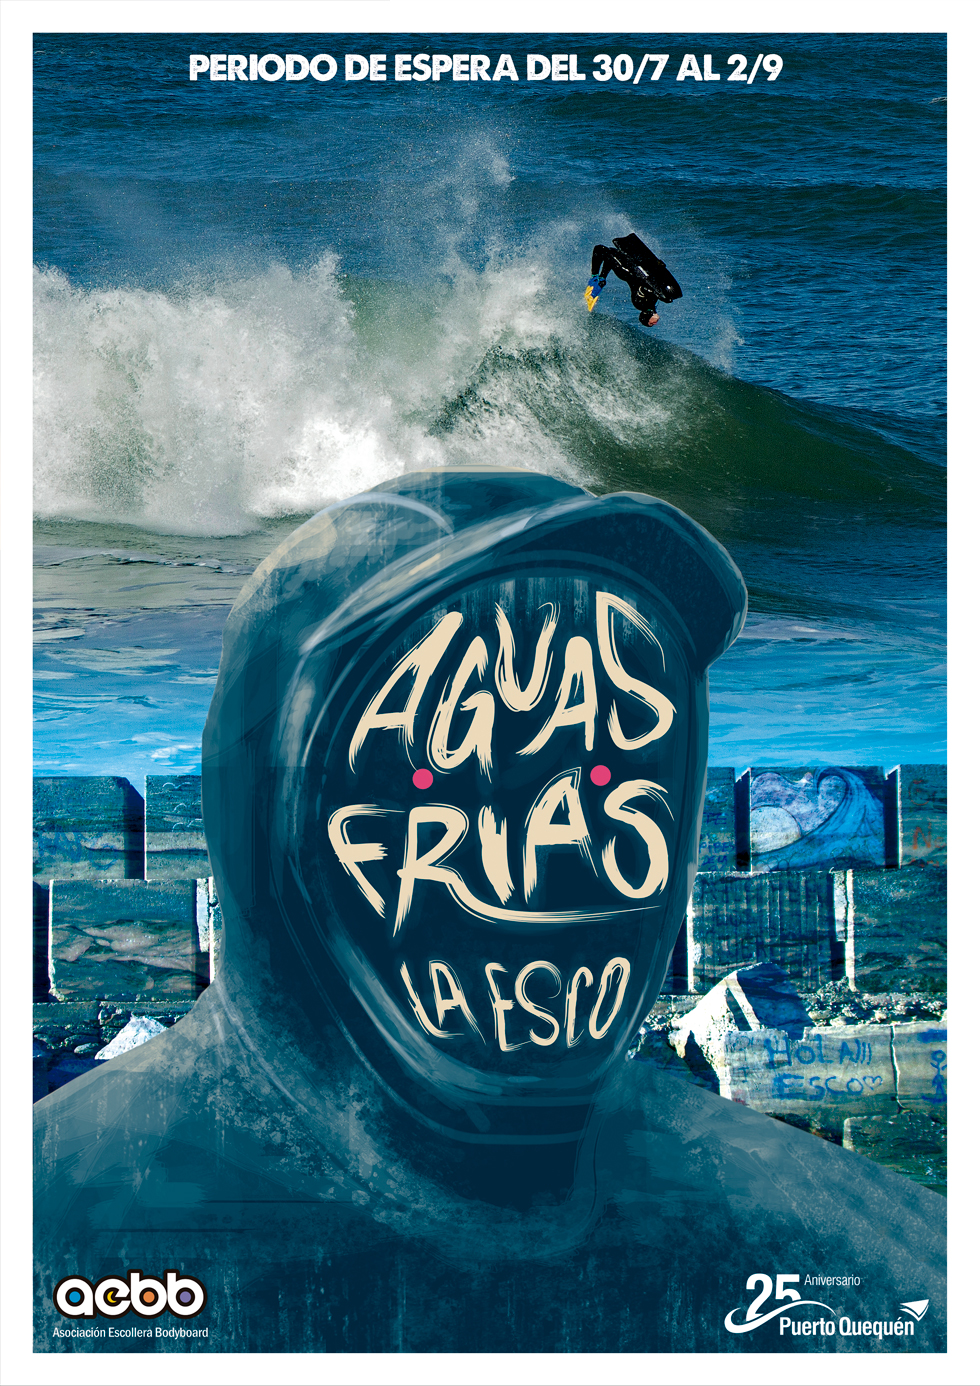 Aguas Frias Bodyboarding